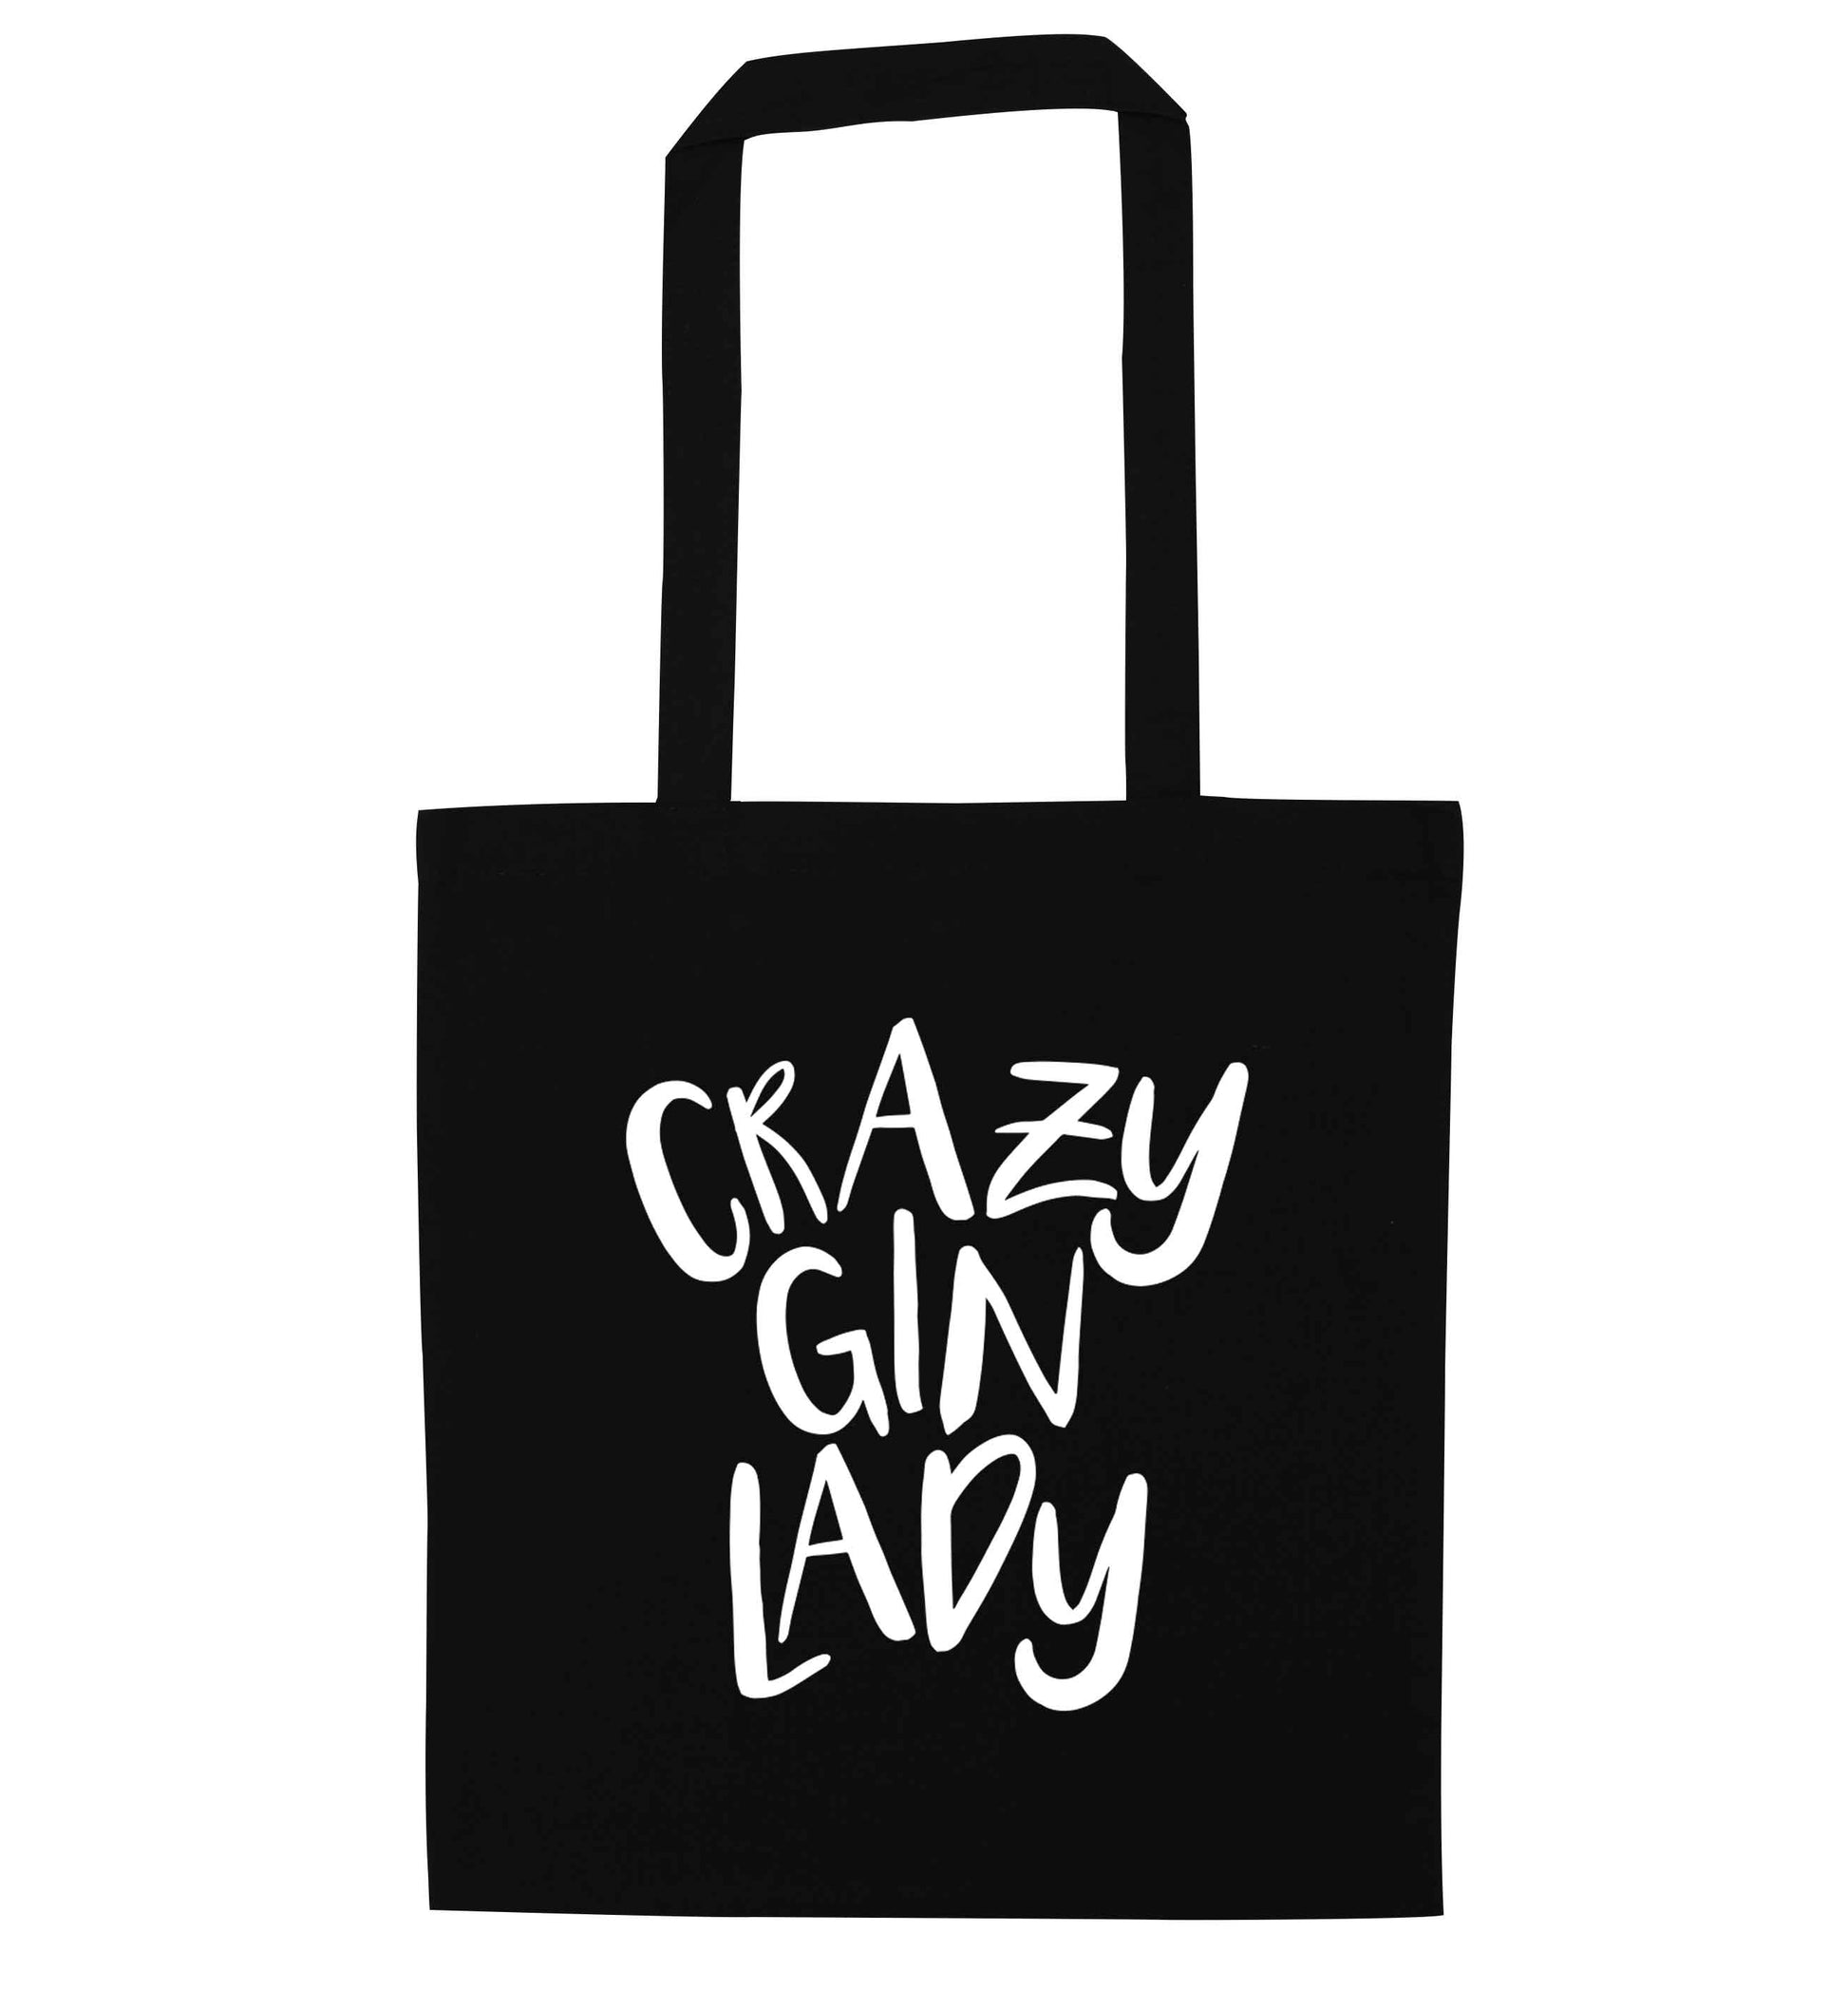 Crazy gin lady black tote bag